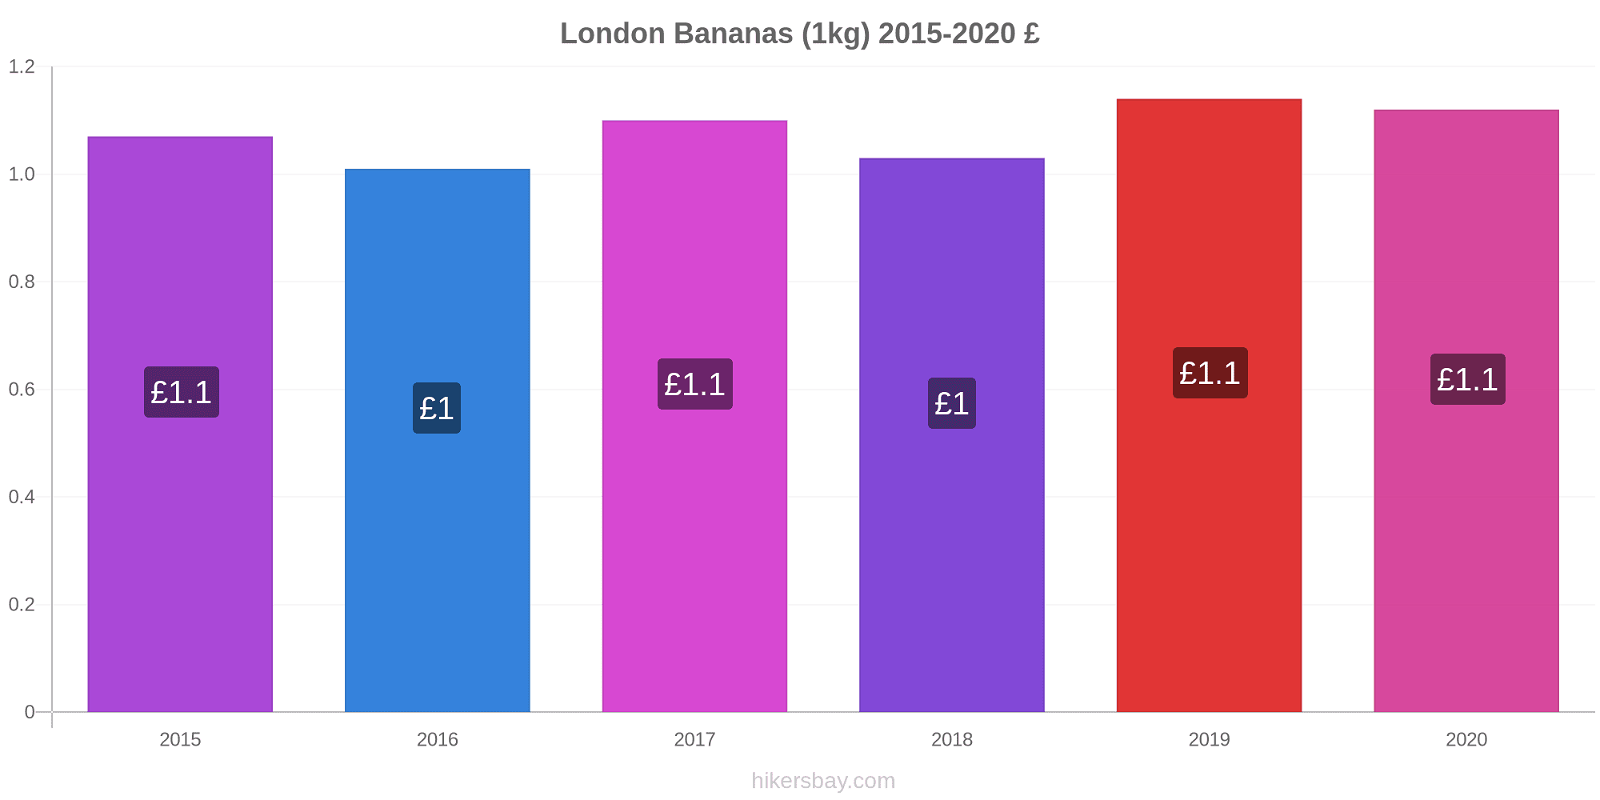 London price changes Bananas (1kg) hikersbay.com